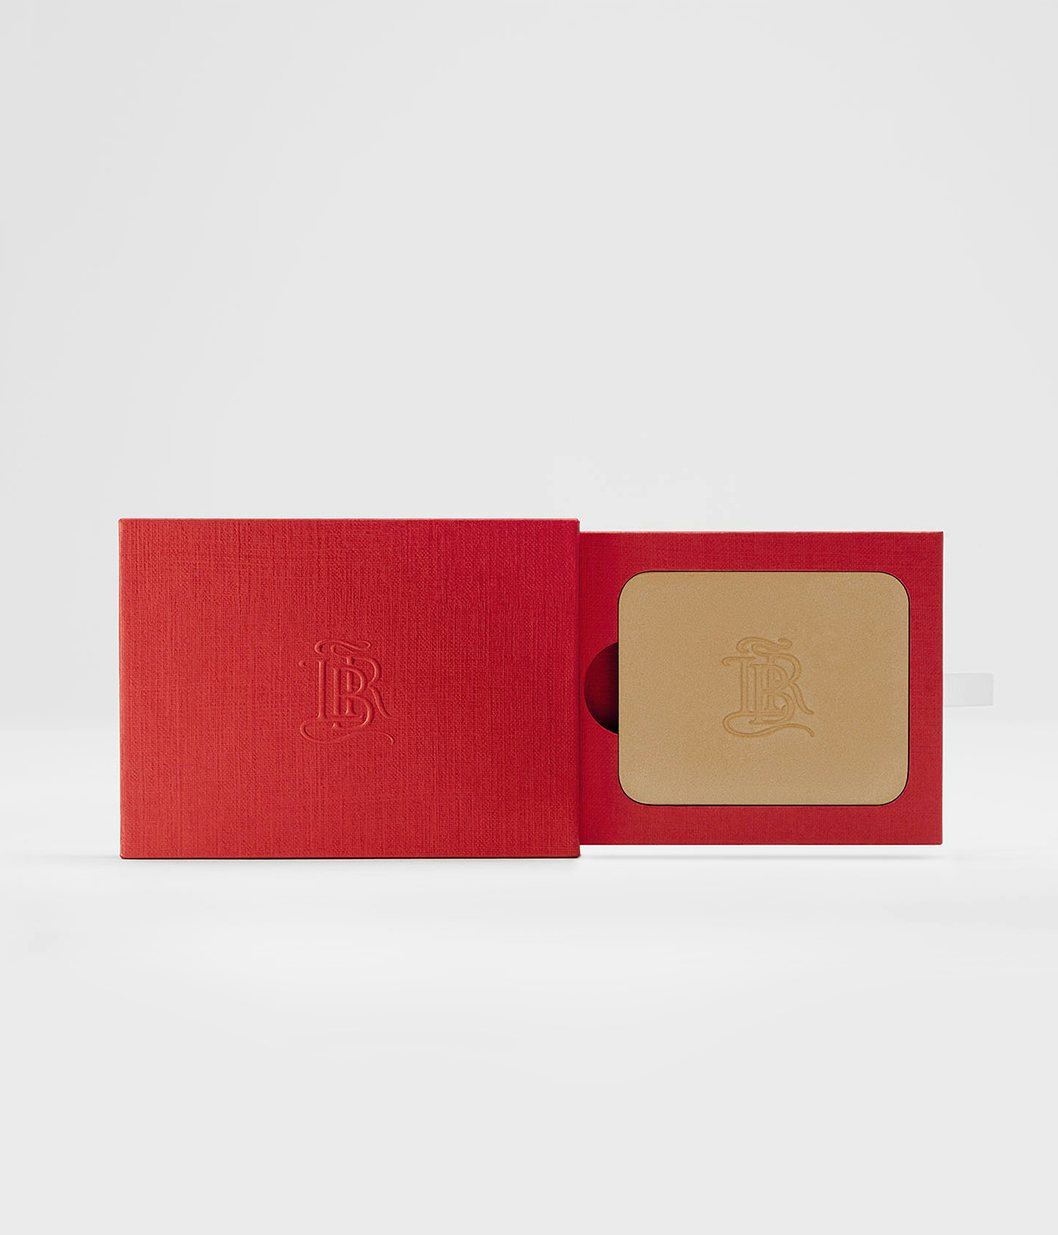 La bouche rouge La Terre Blonde bronzer in the red paper case